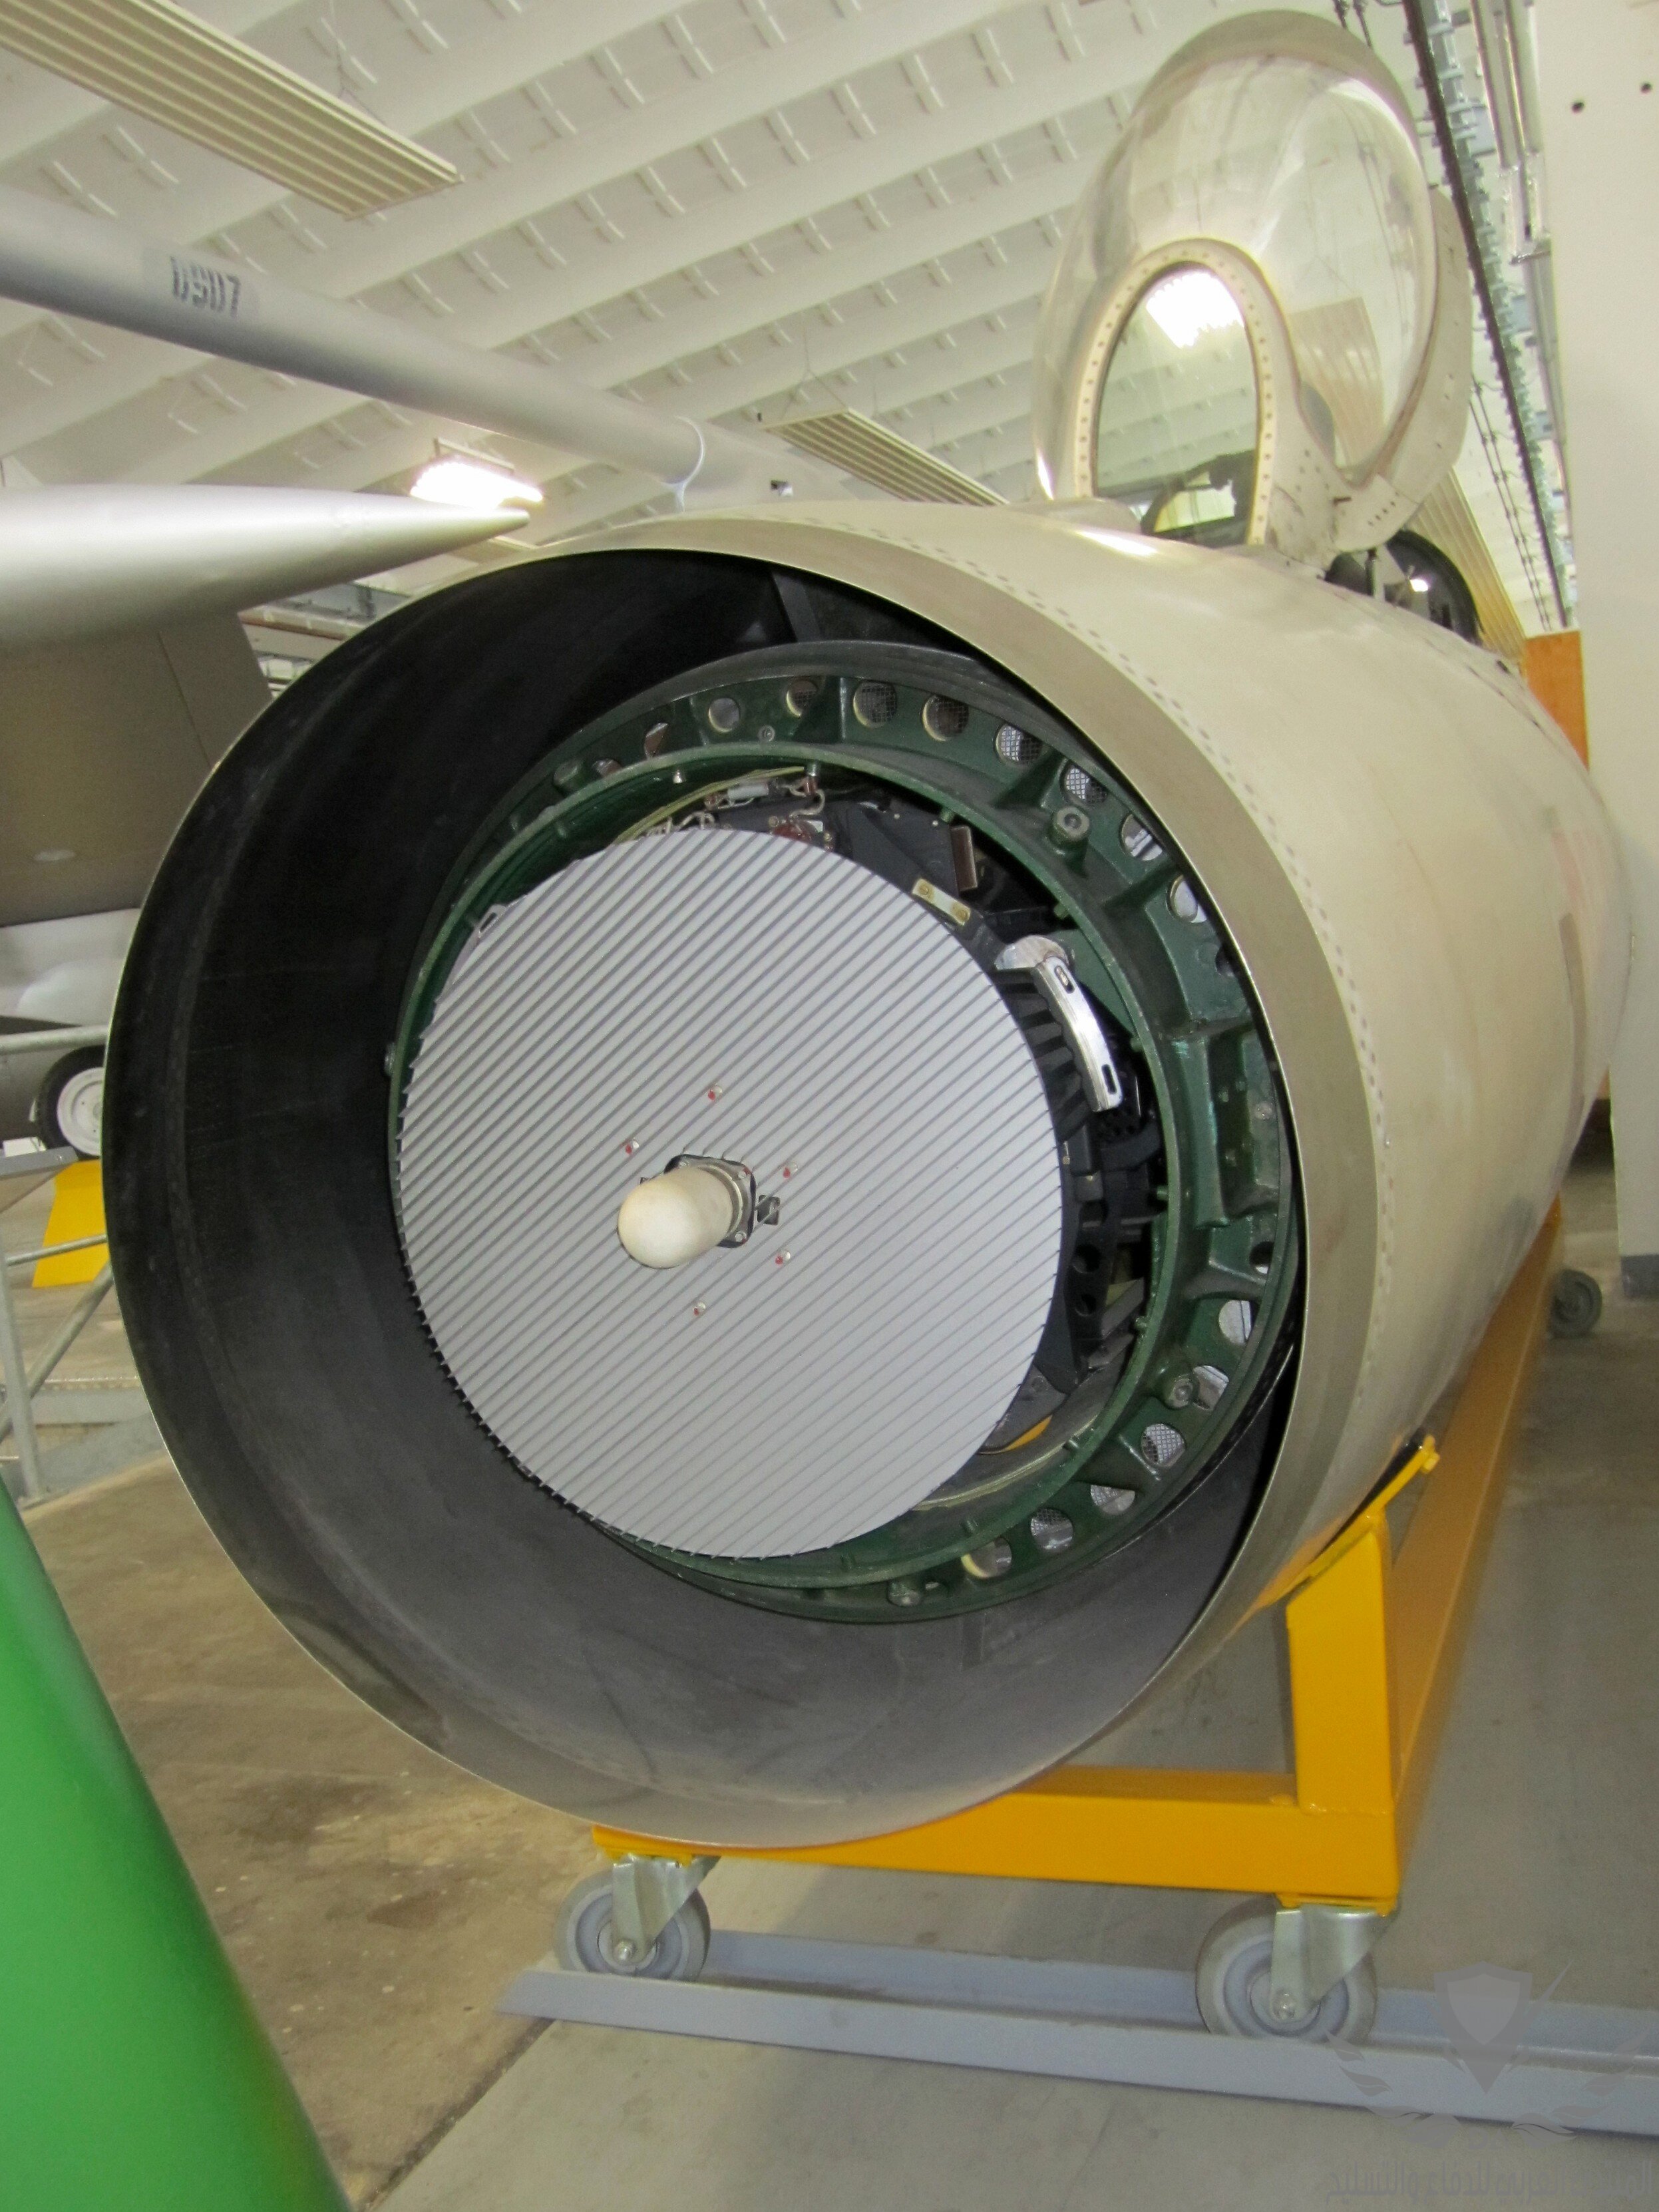 Mikoyan_MiG-21PFM_radar_at_Luftfahrtmuseum_Wernigerode_(cropped).jpg